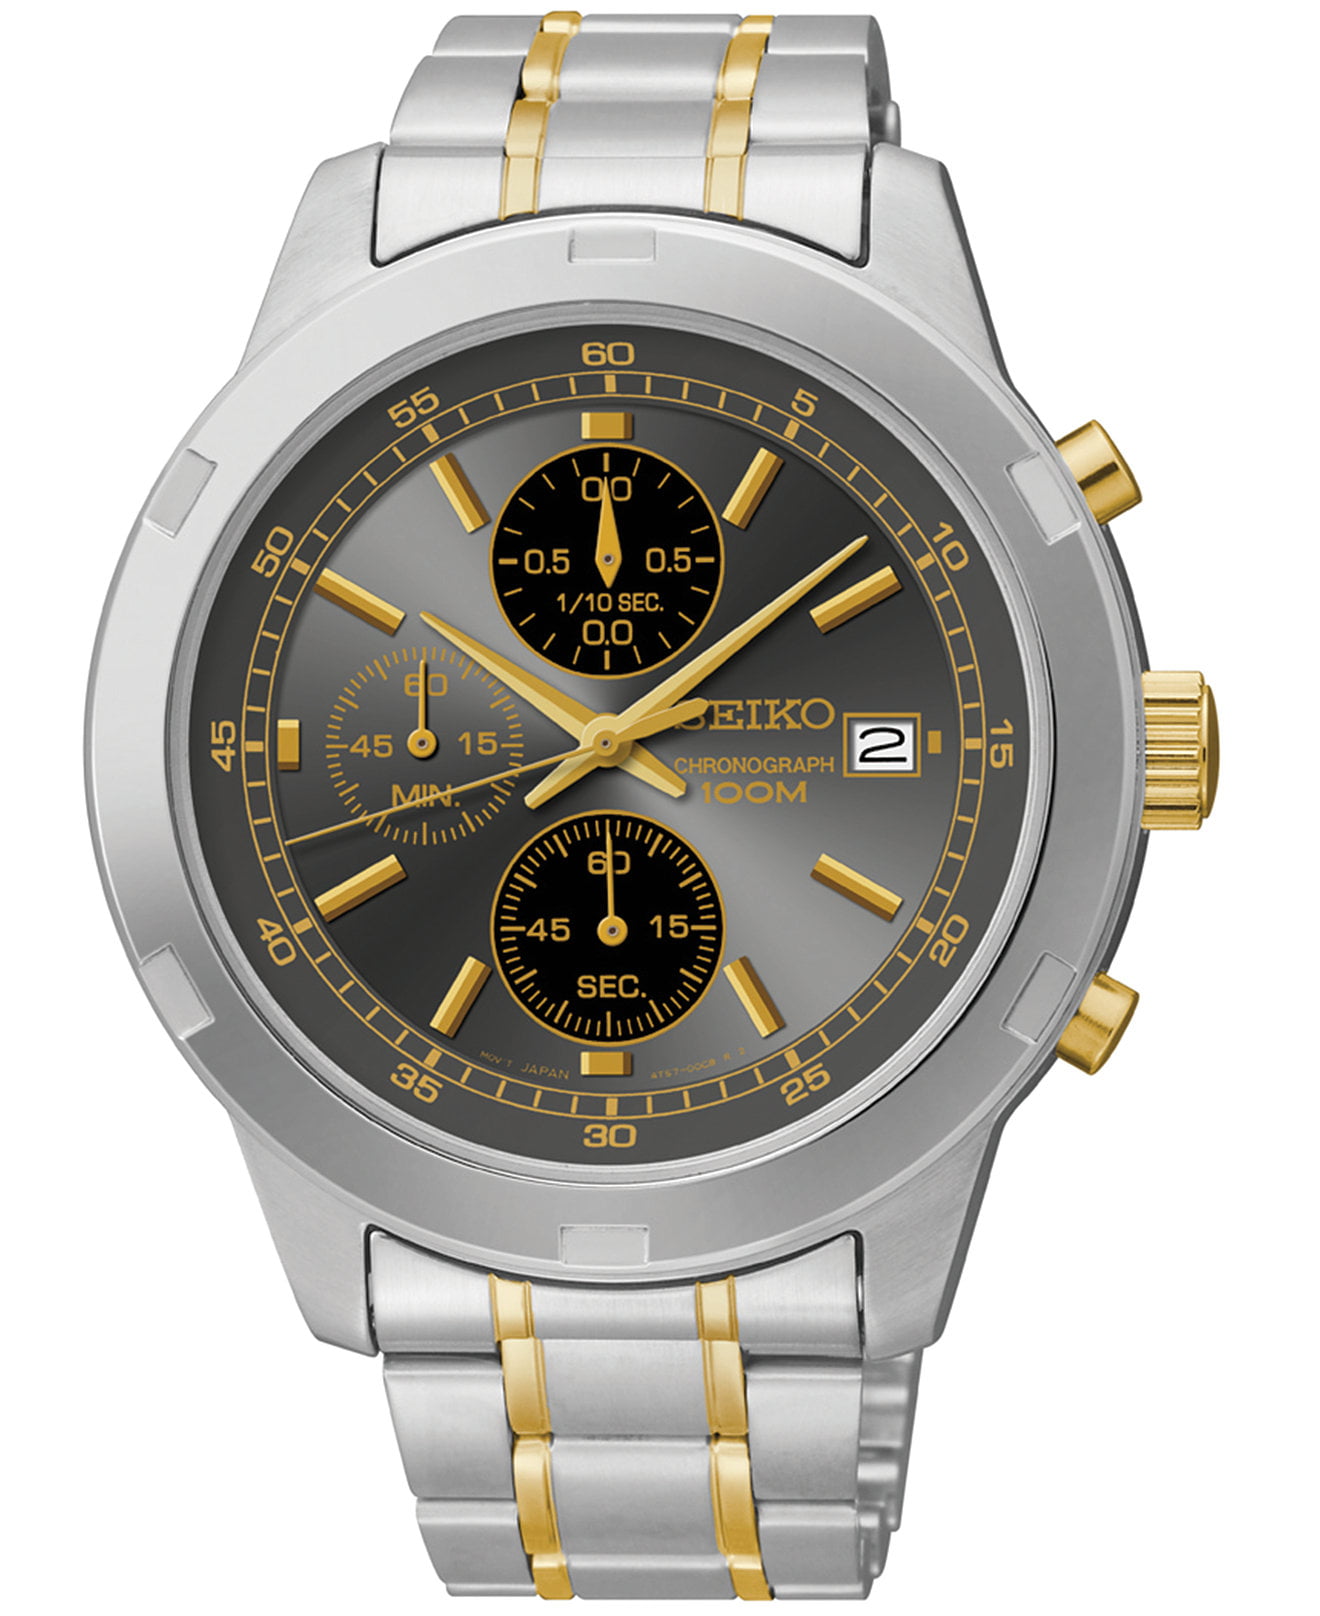 Seiko Men's SKS425 Two-Tone Analog Watch With Grey Dial 